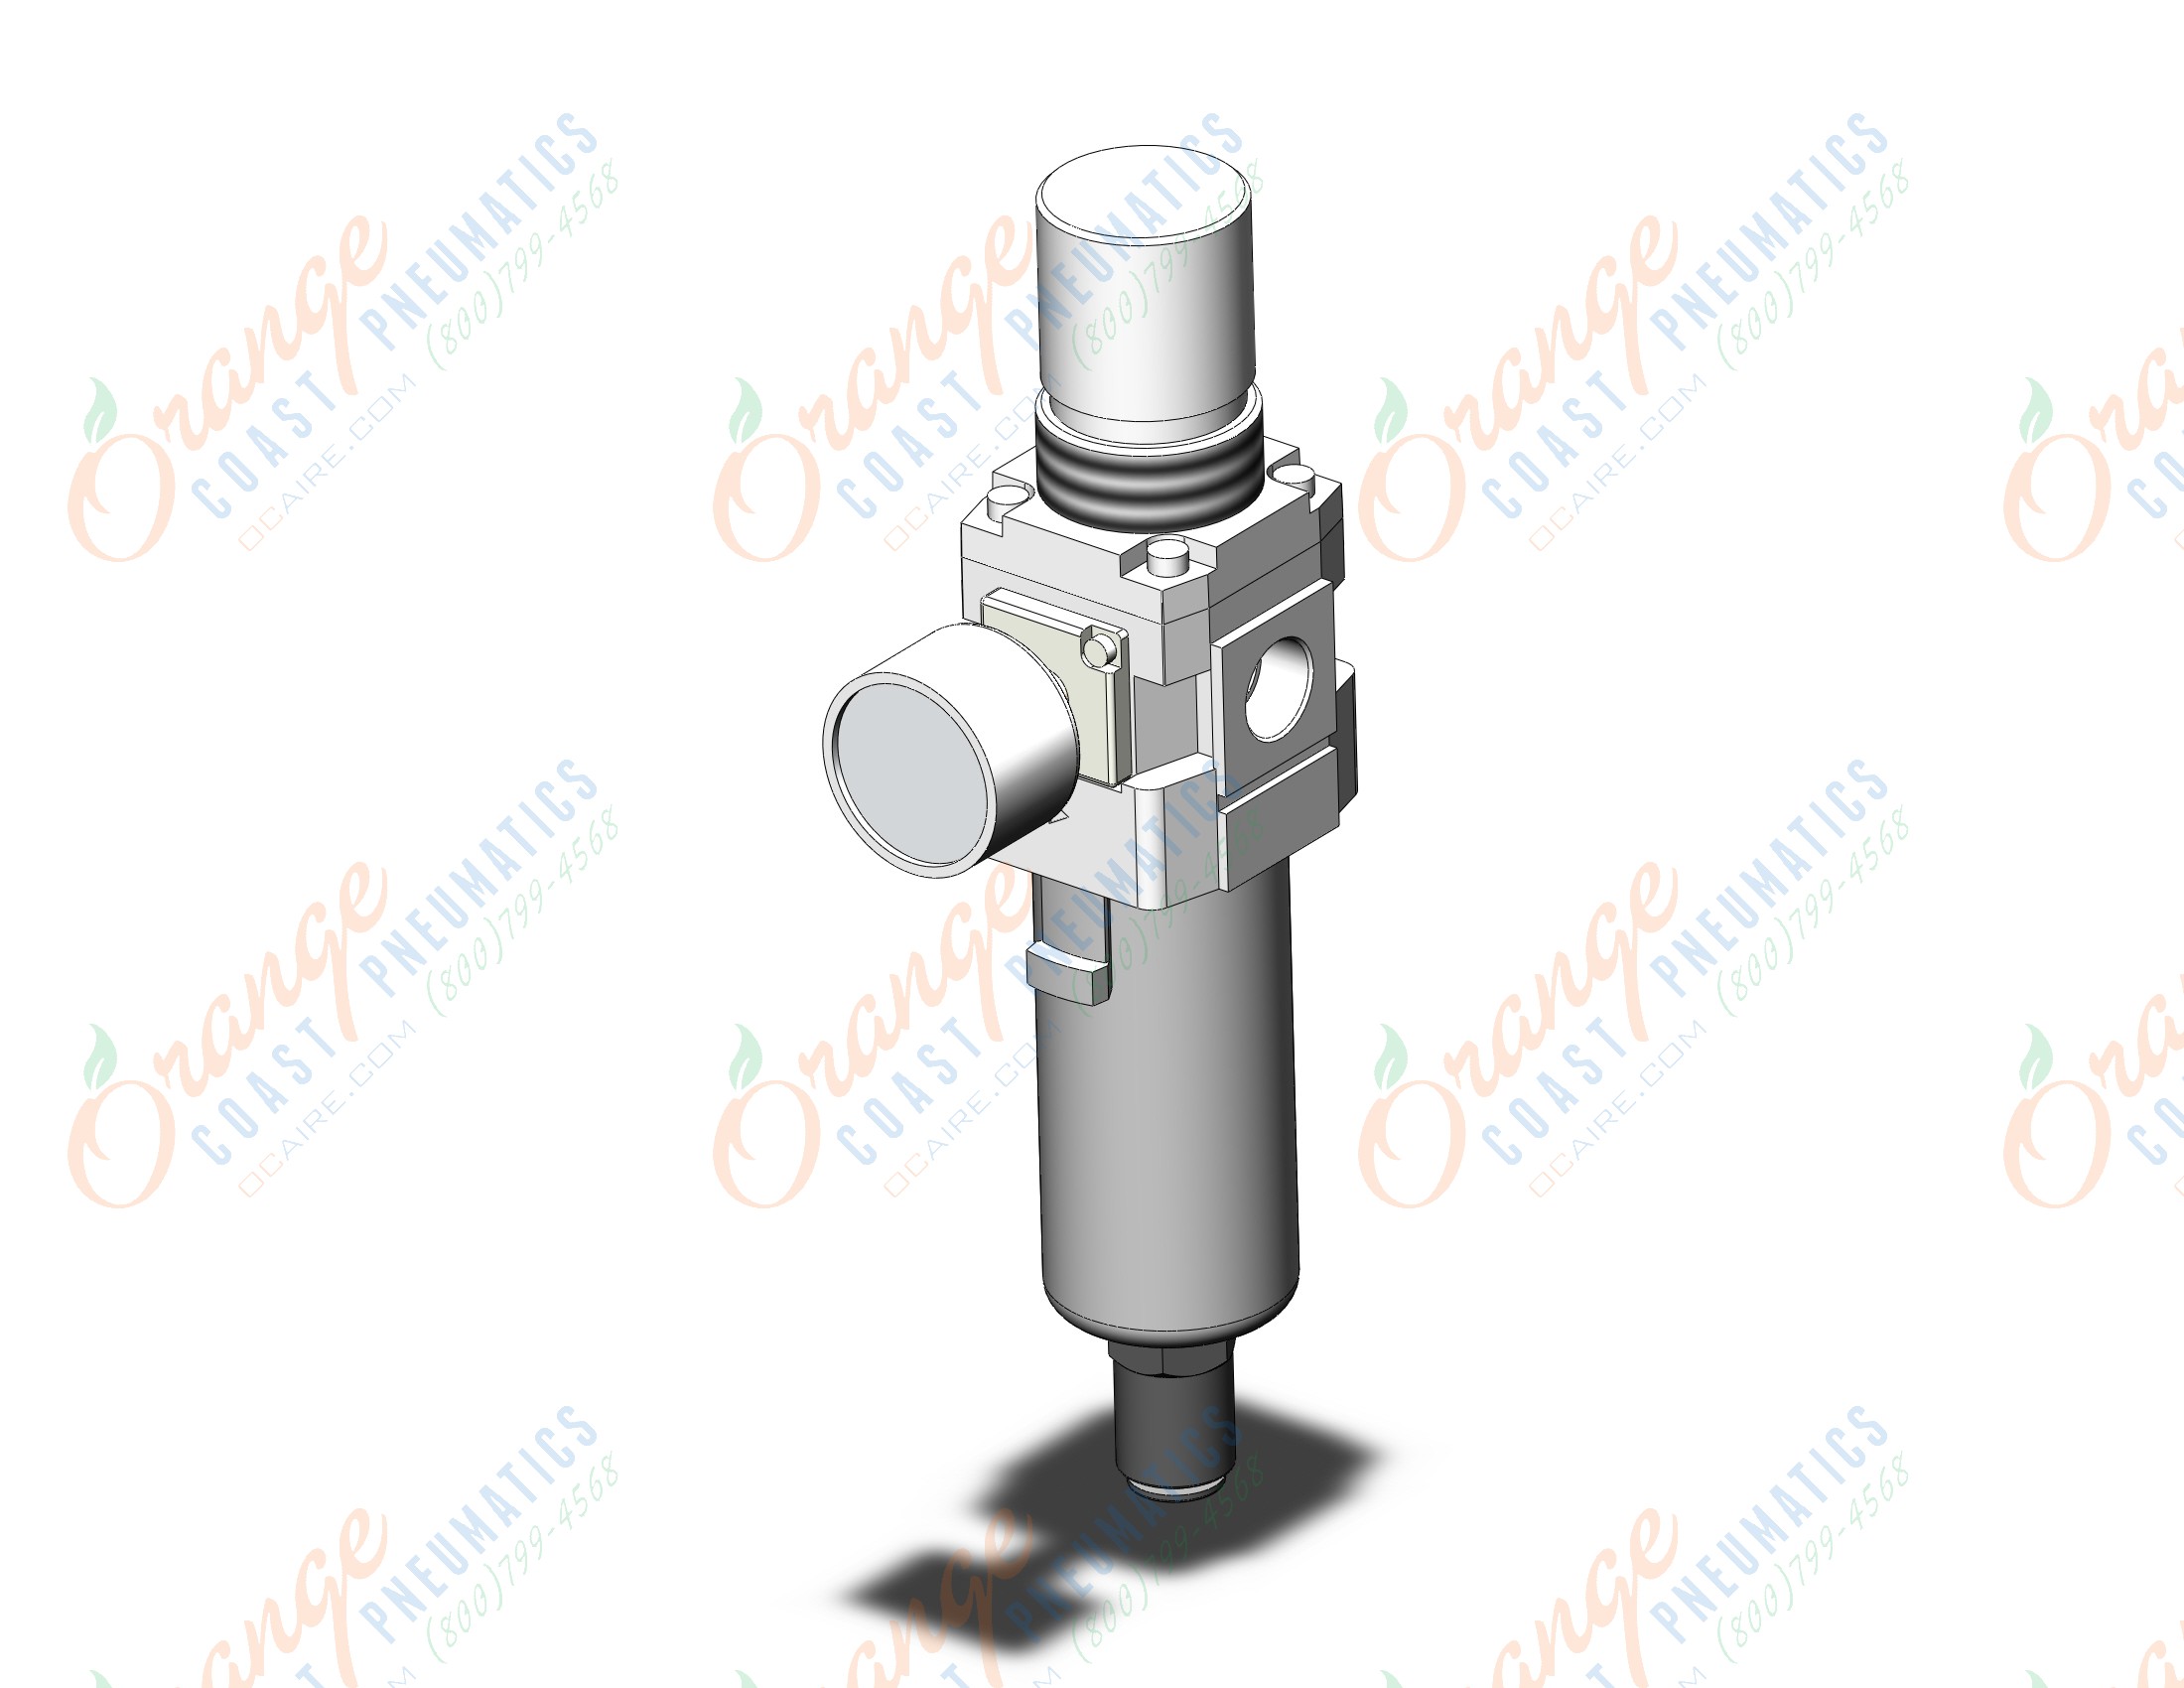 SMC AW30-N03CG-12Z-B filter/regulator, FILTER/REGULATOR, MODULAR F.R.L.